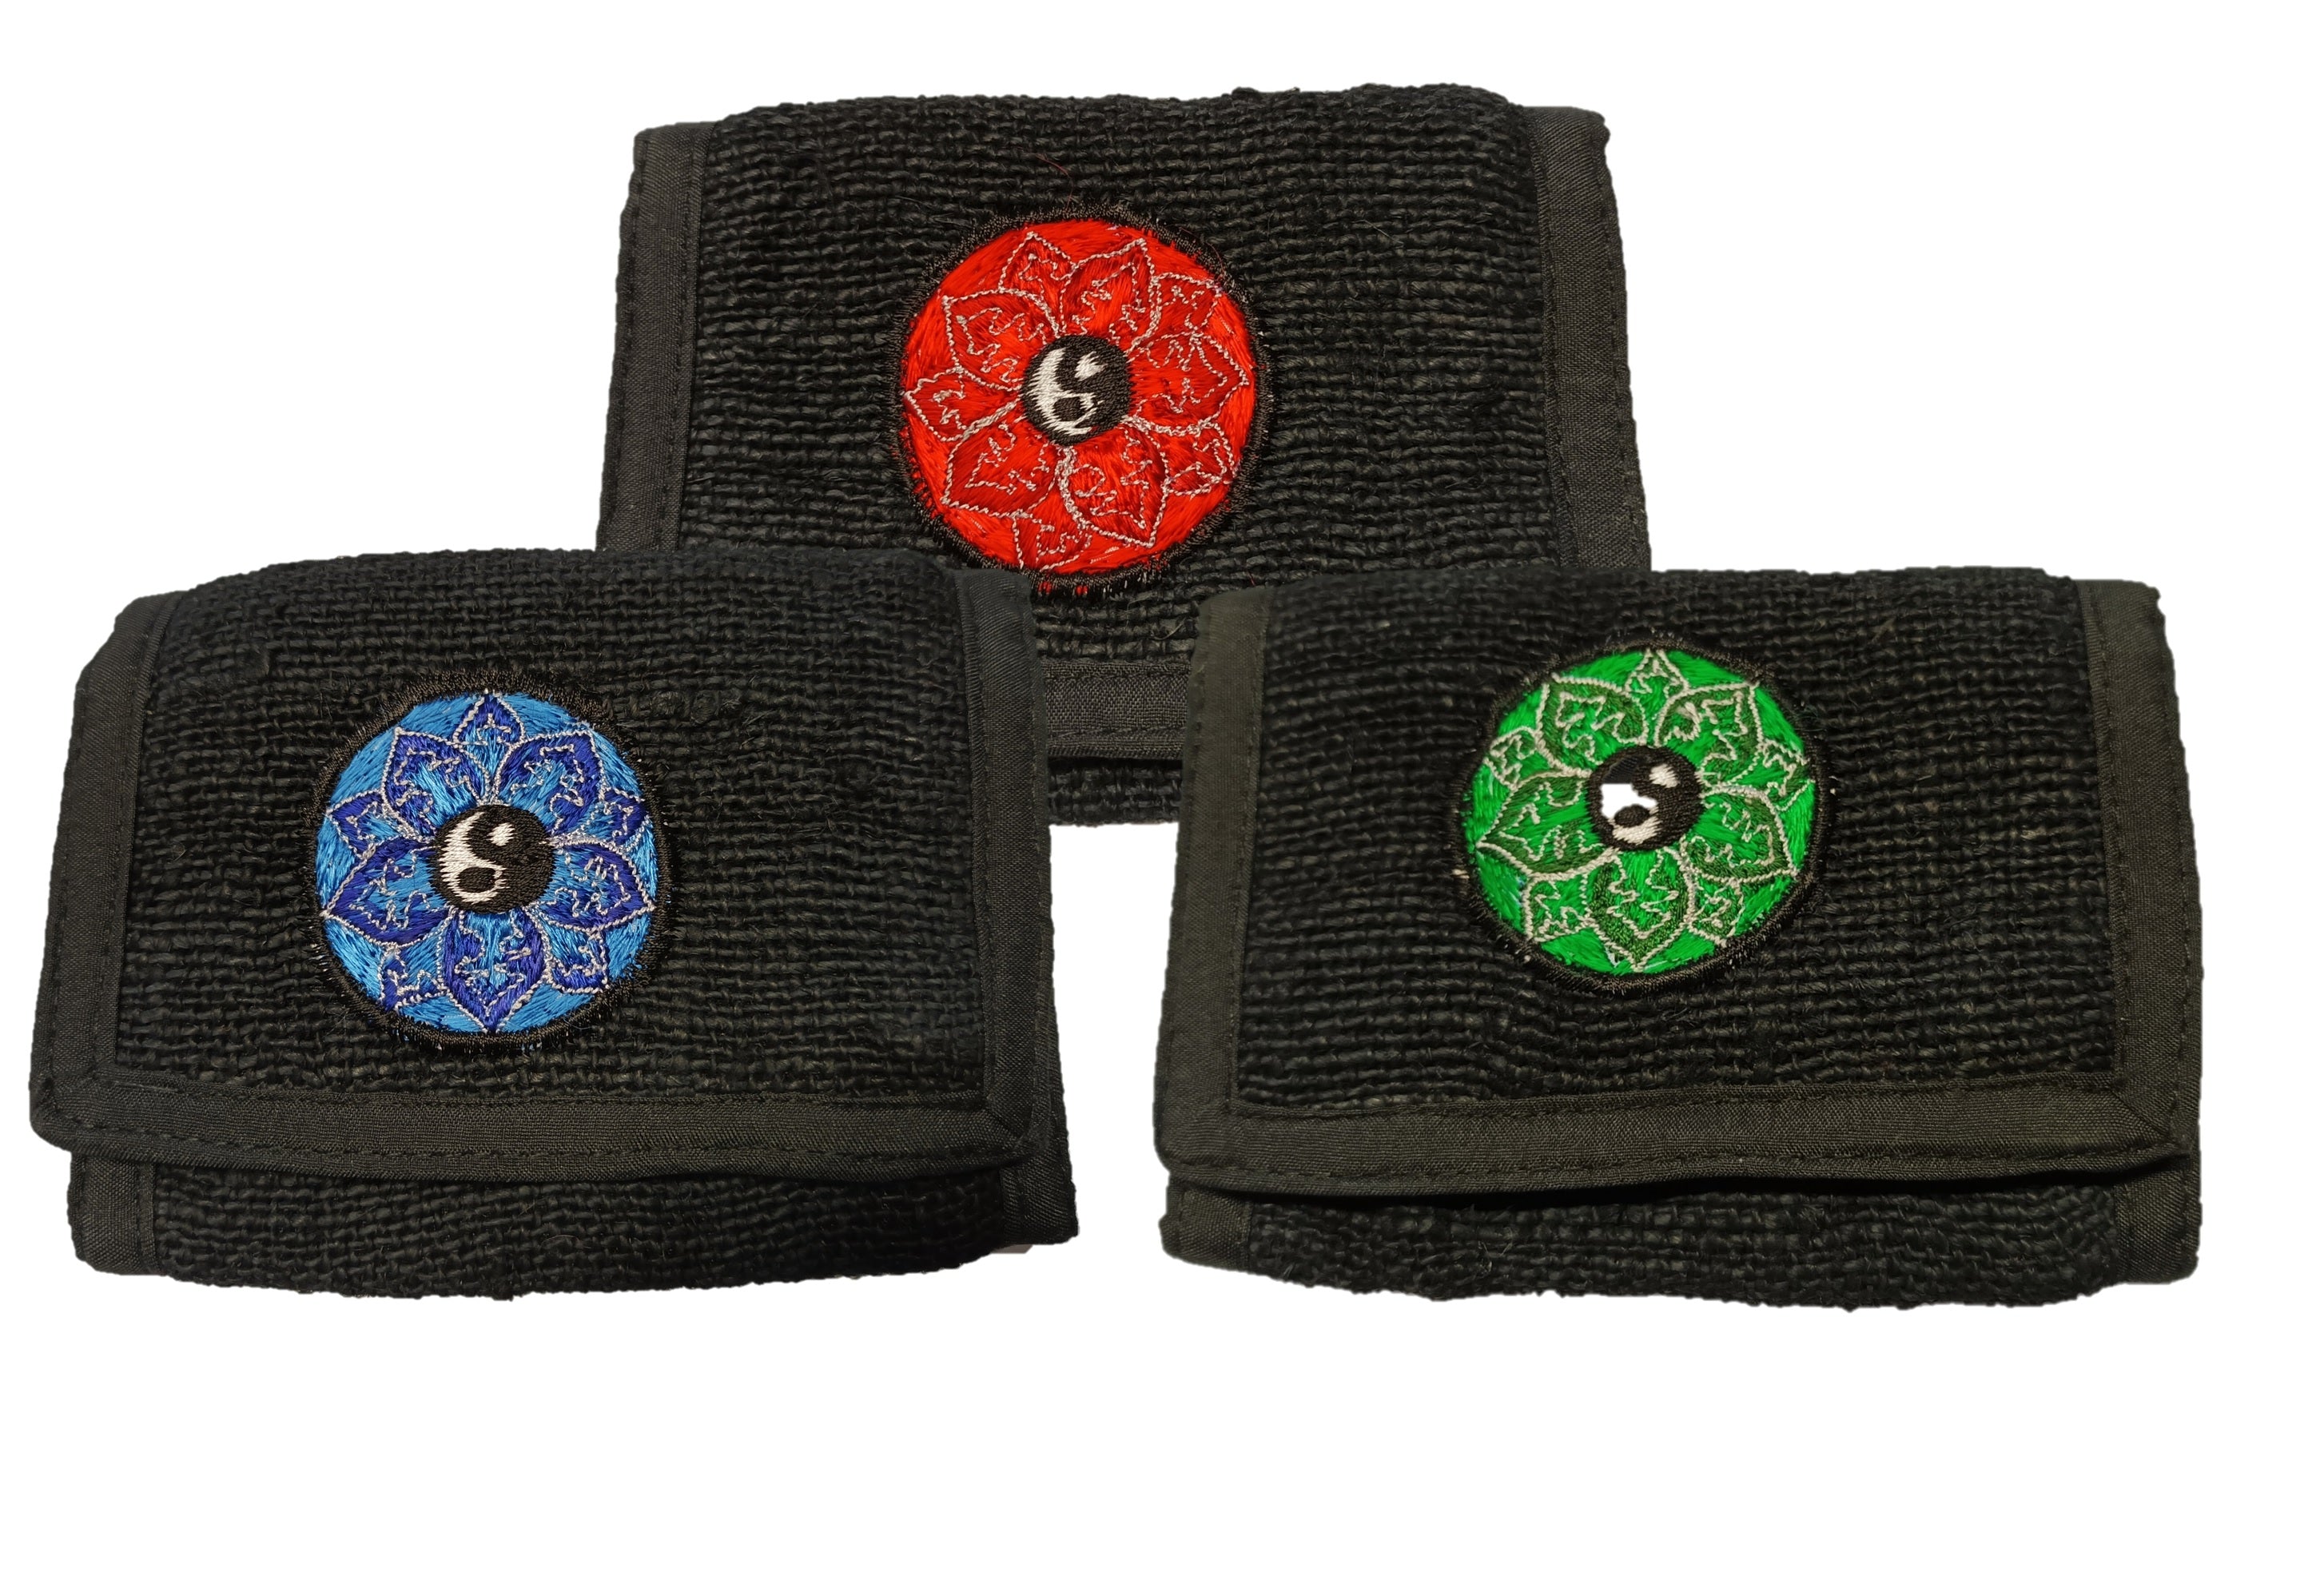 Black Hemp Wallet Cultbagz wallet made of black hemp - various motifs